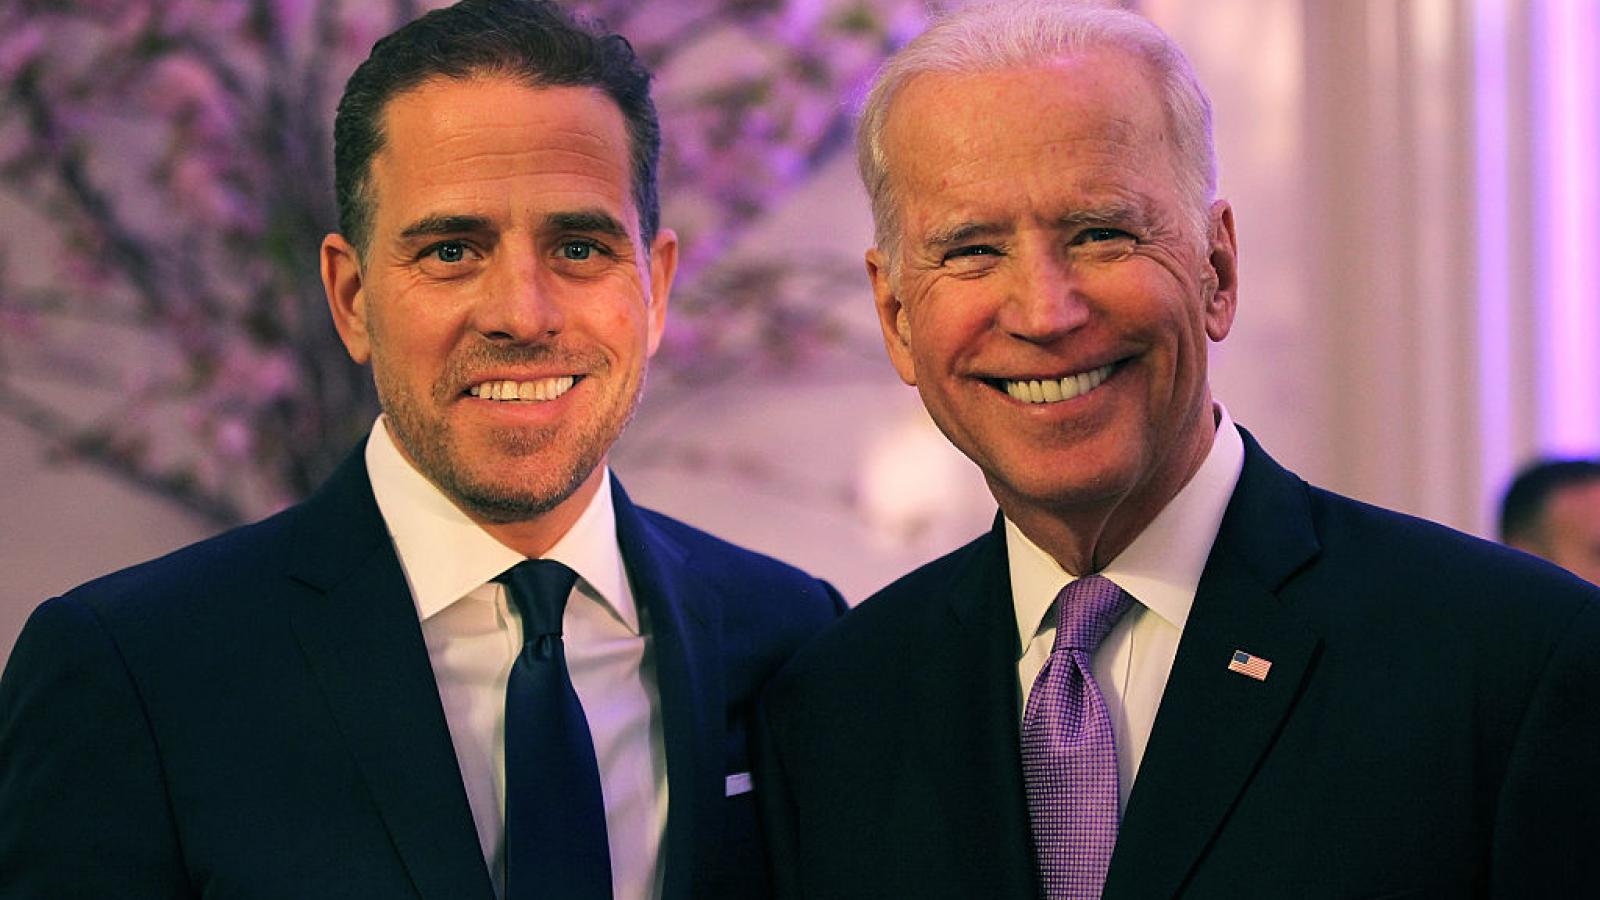 Hunter Biden and Joe Biden in 2016